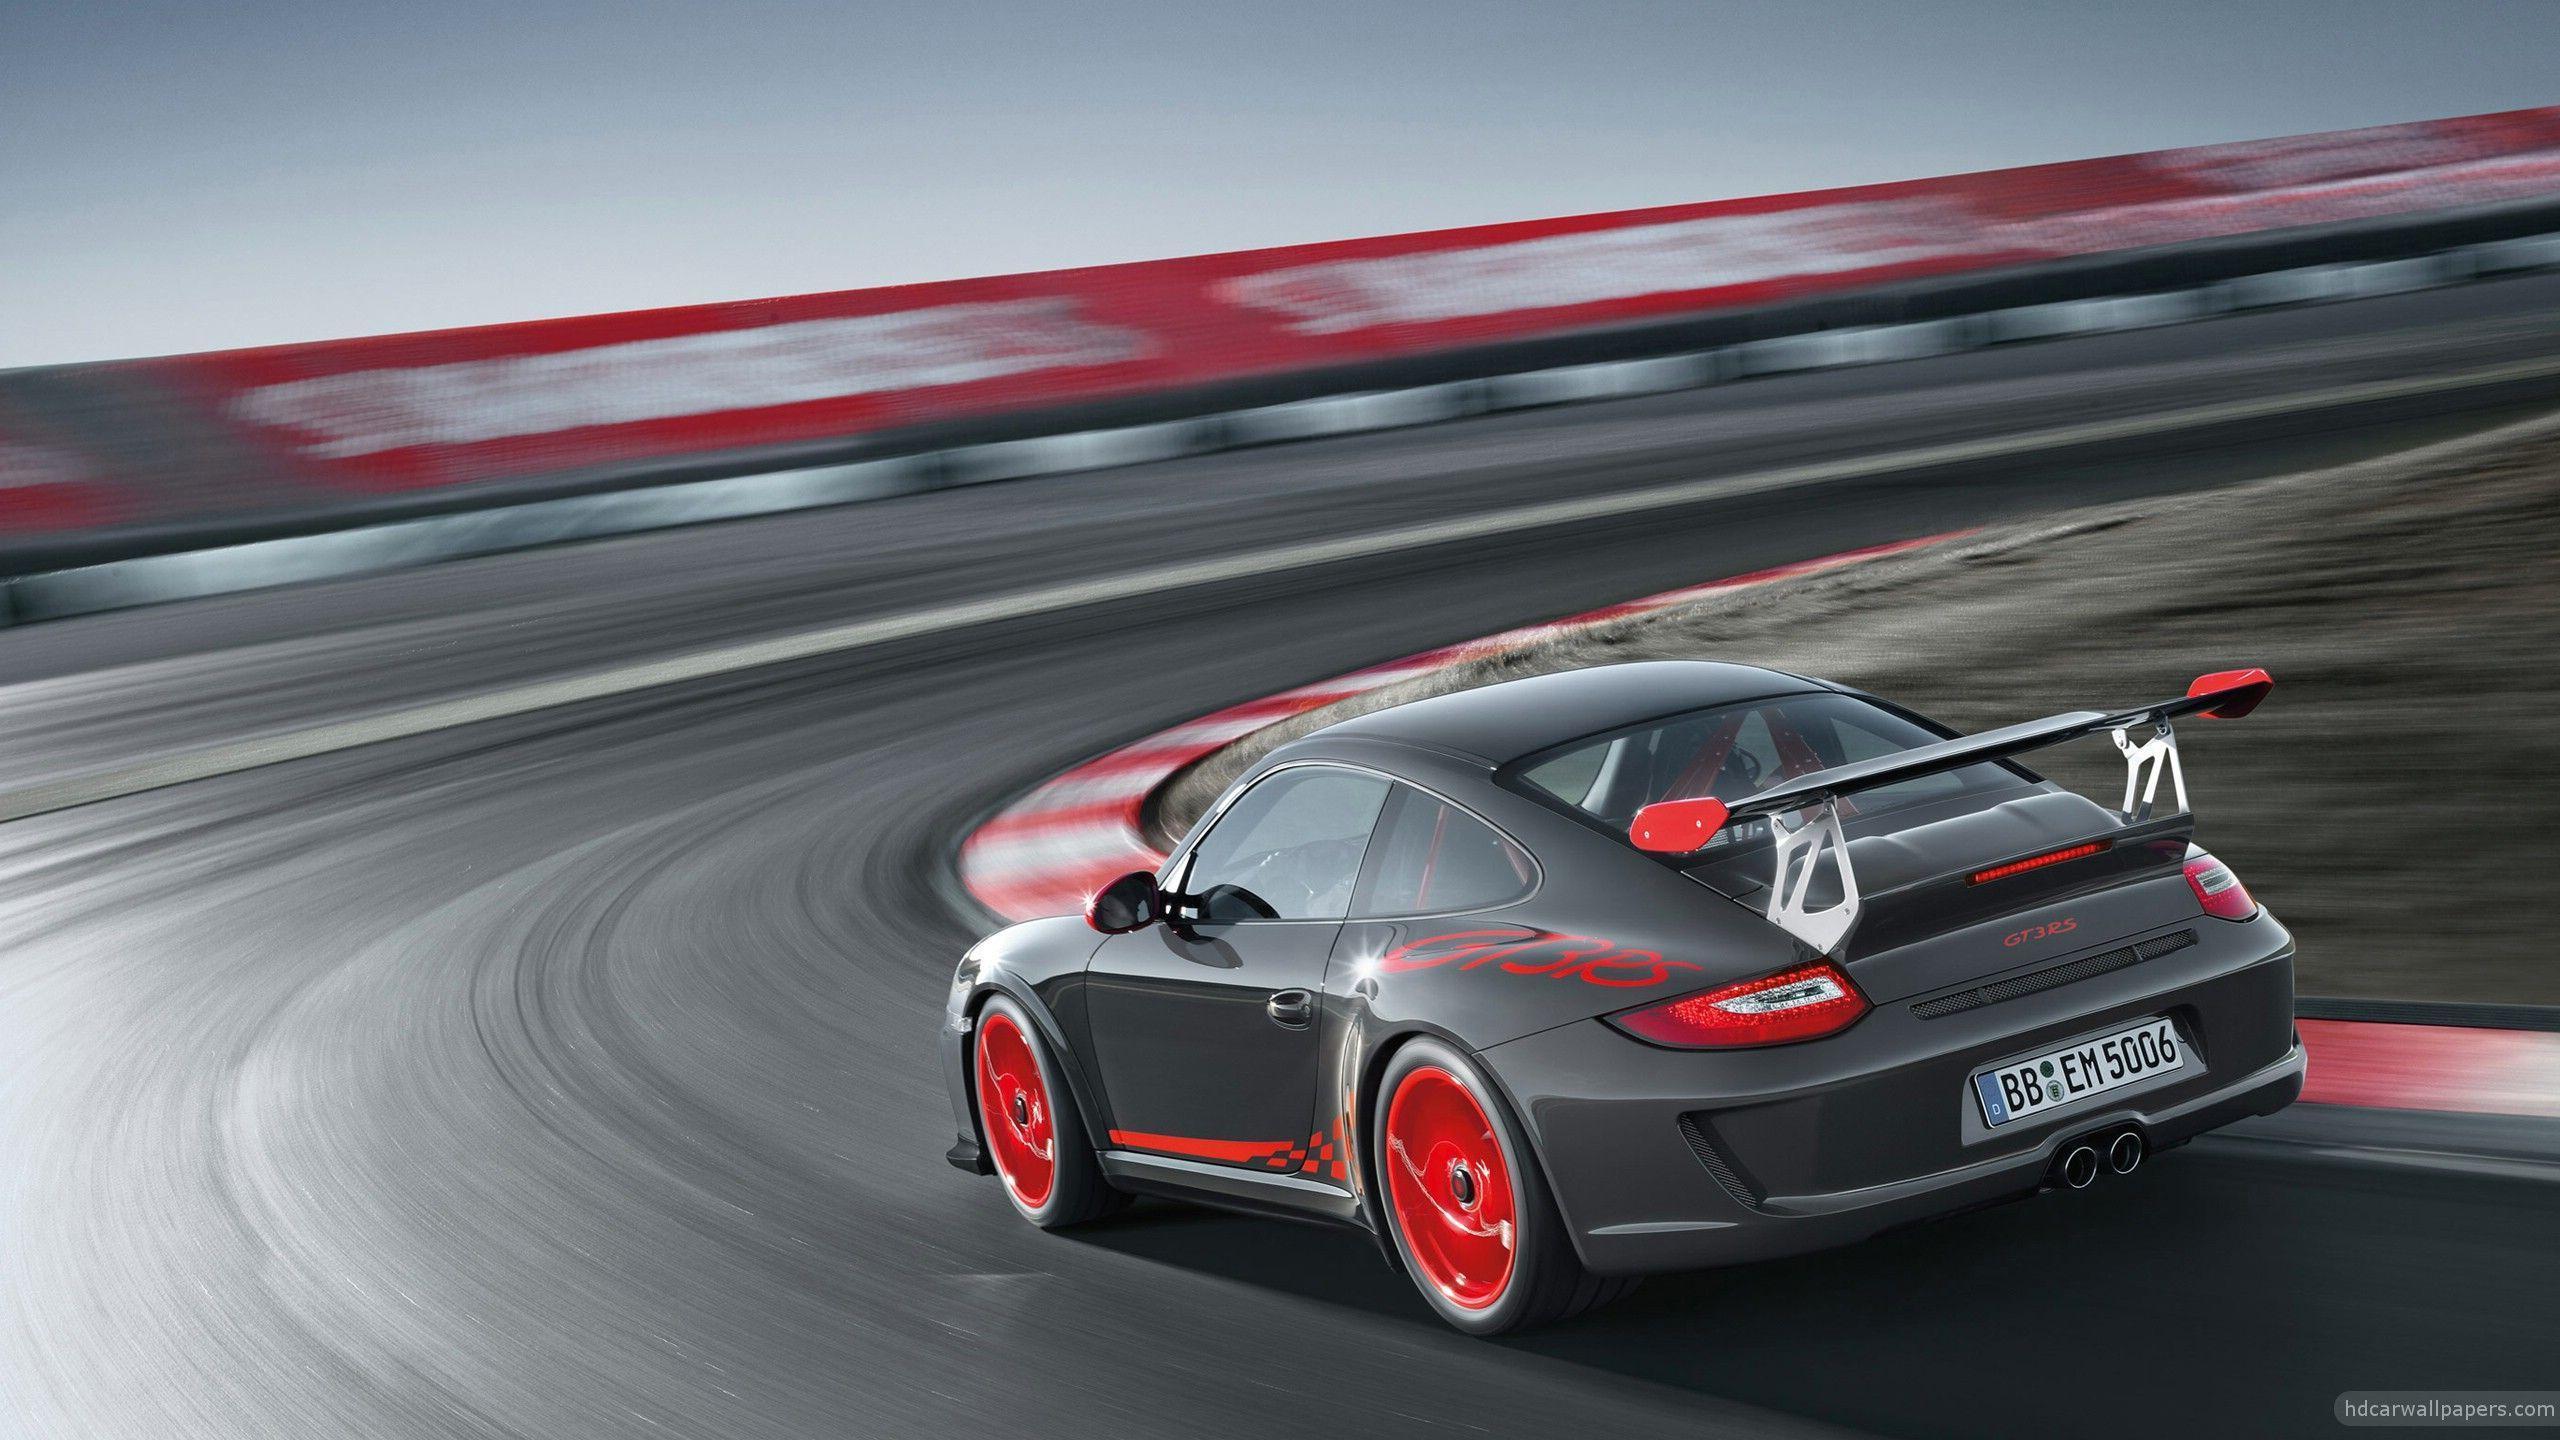 Porsche 911 GT3 RS Wallpaper 2560x1600 px Free Download